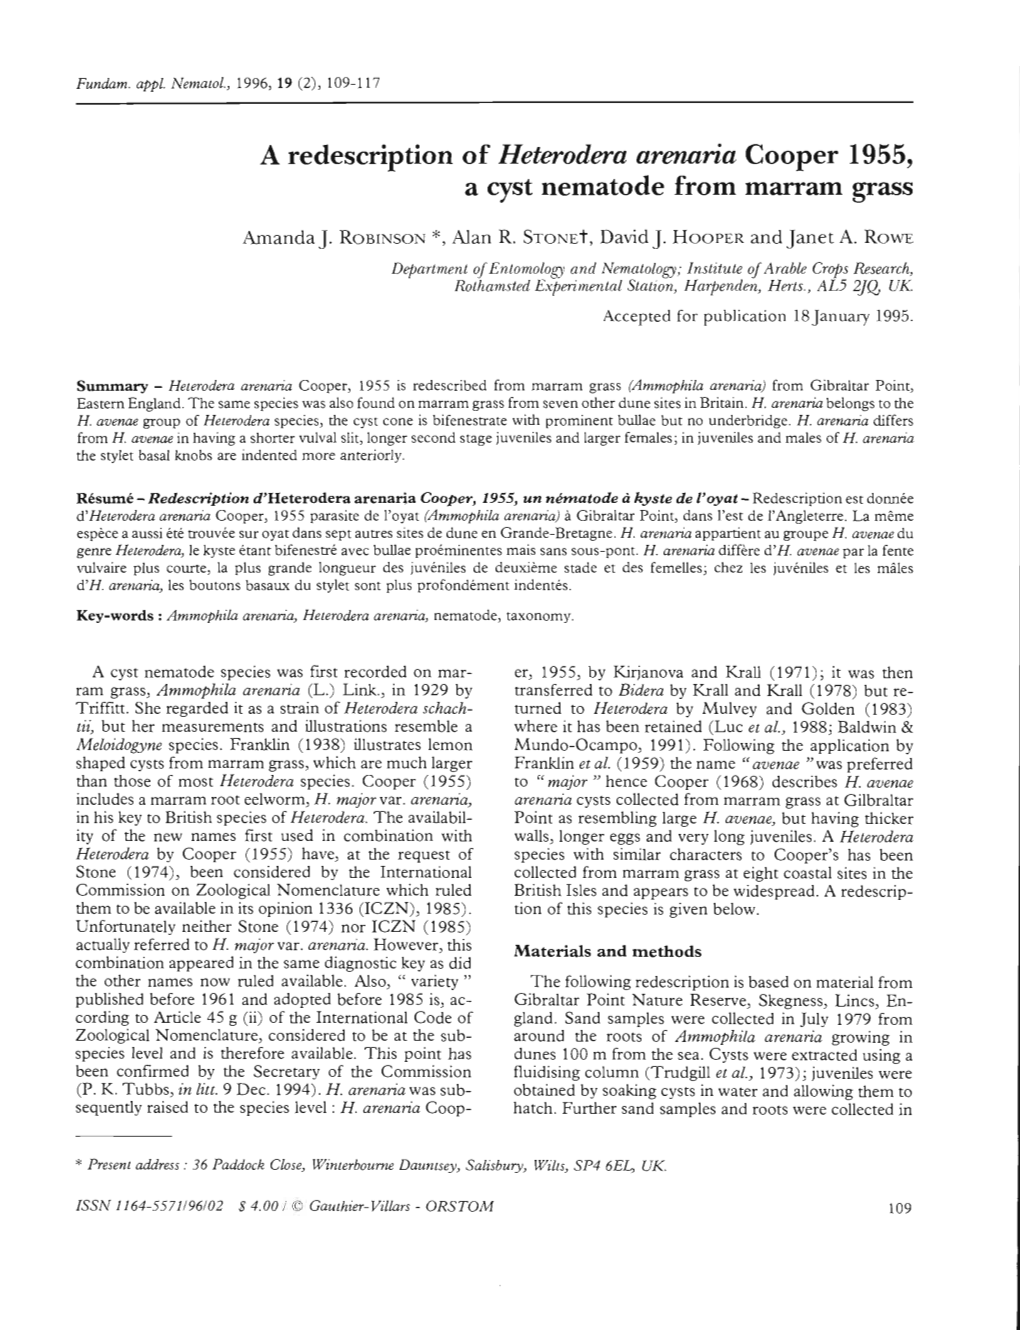 A Redescription of Heterodera Arenaria Cooper 1955, a Cyst Nematode from Marram Grass